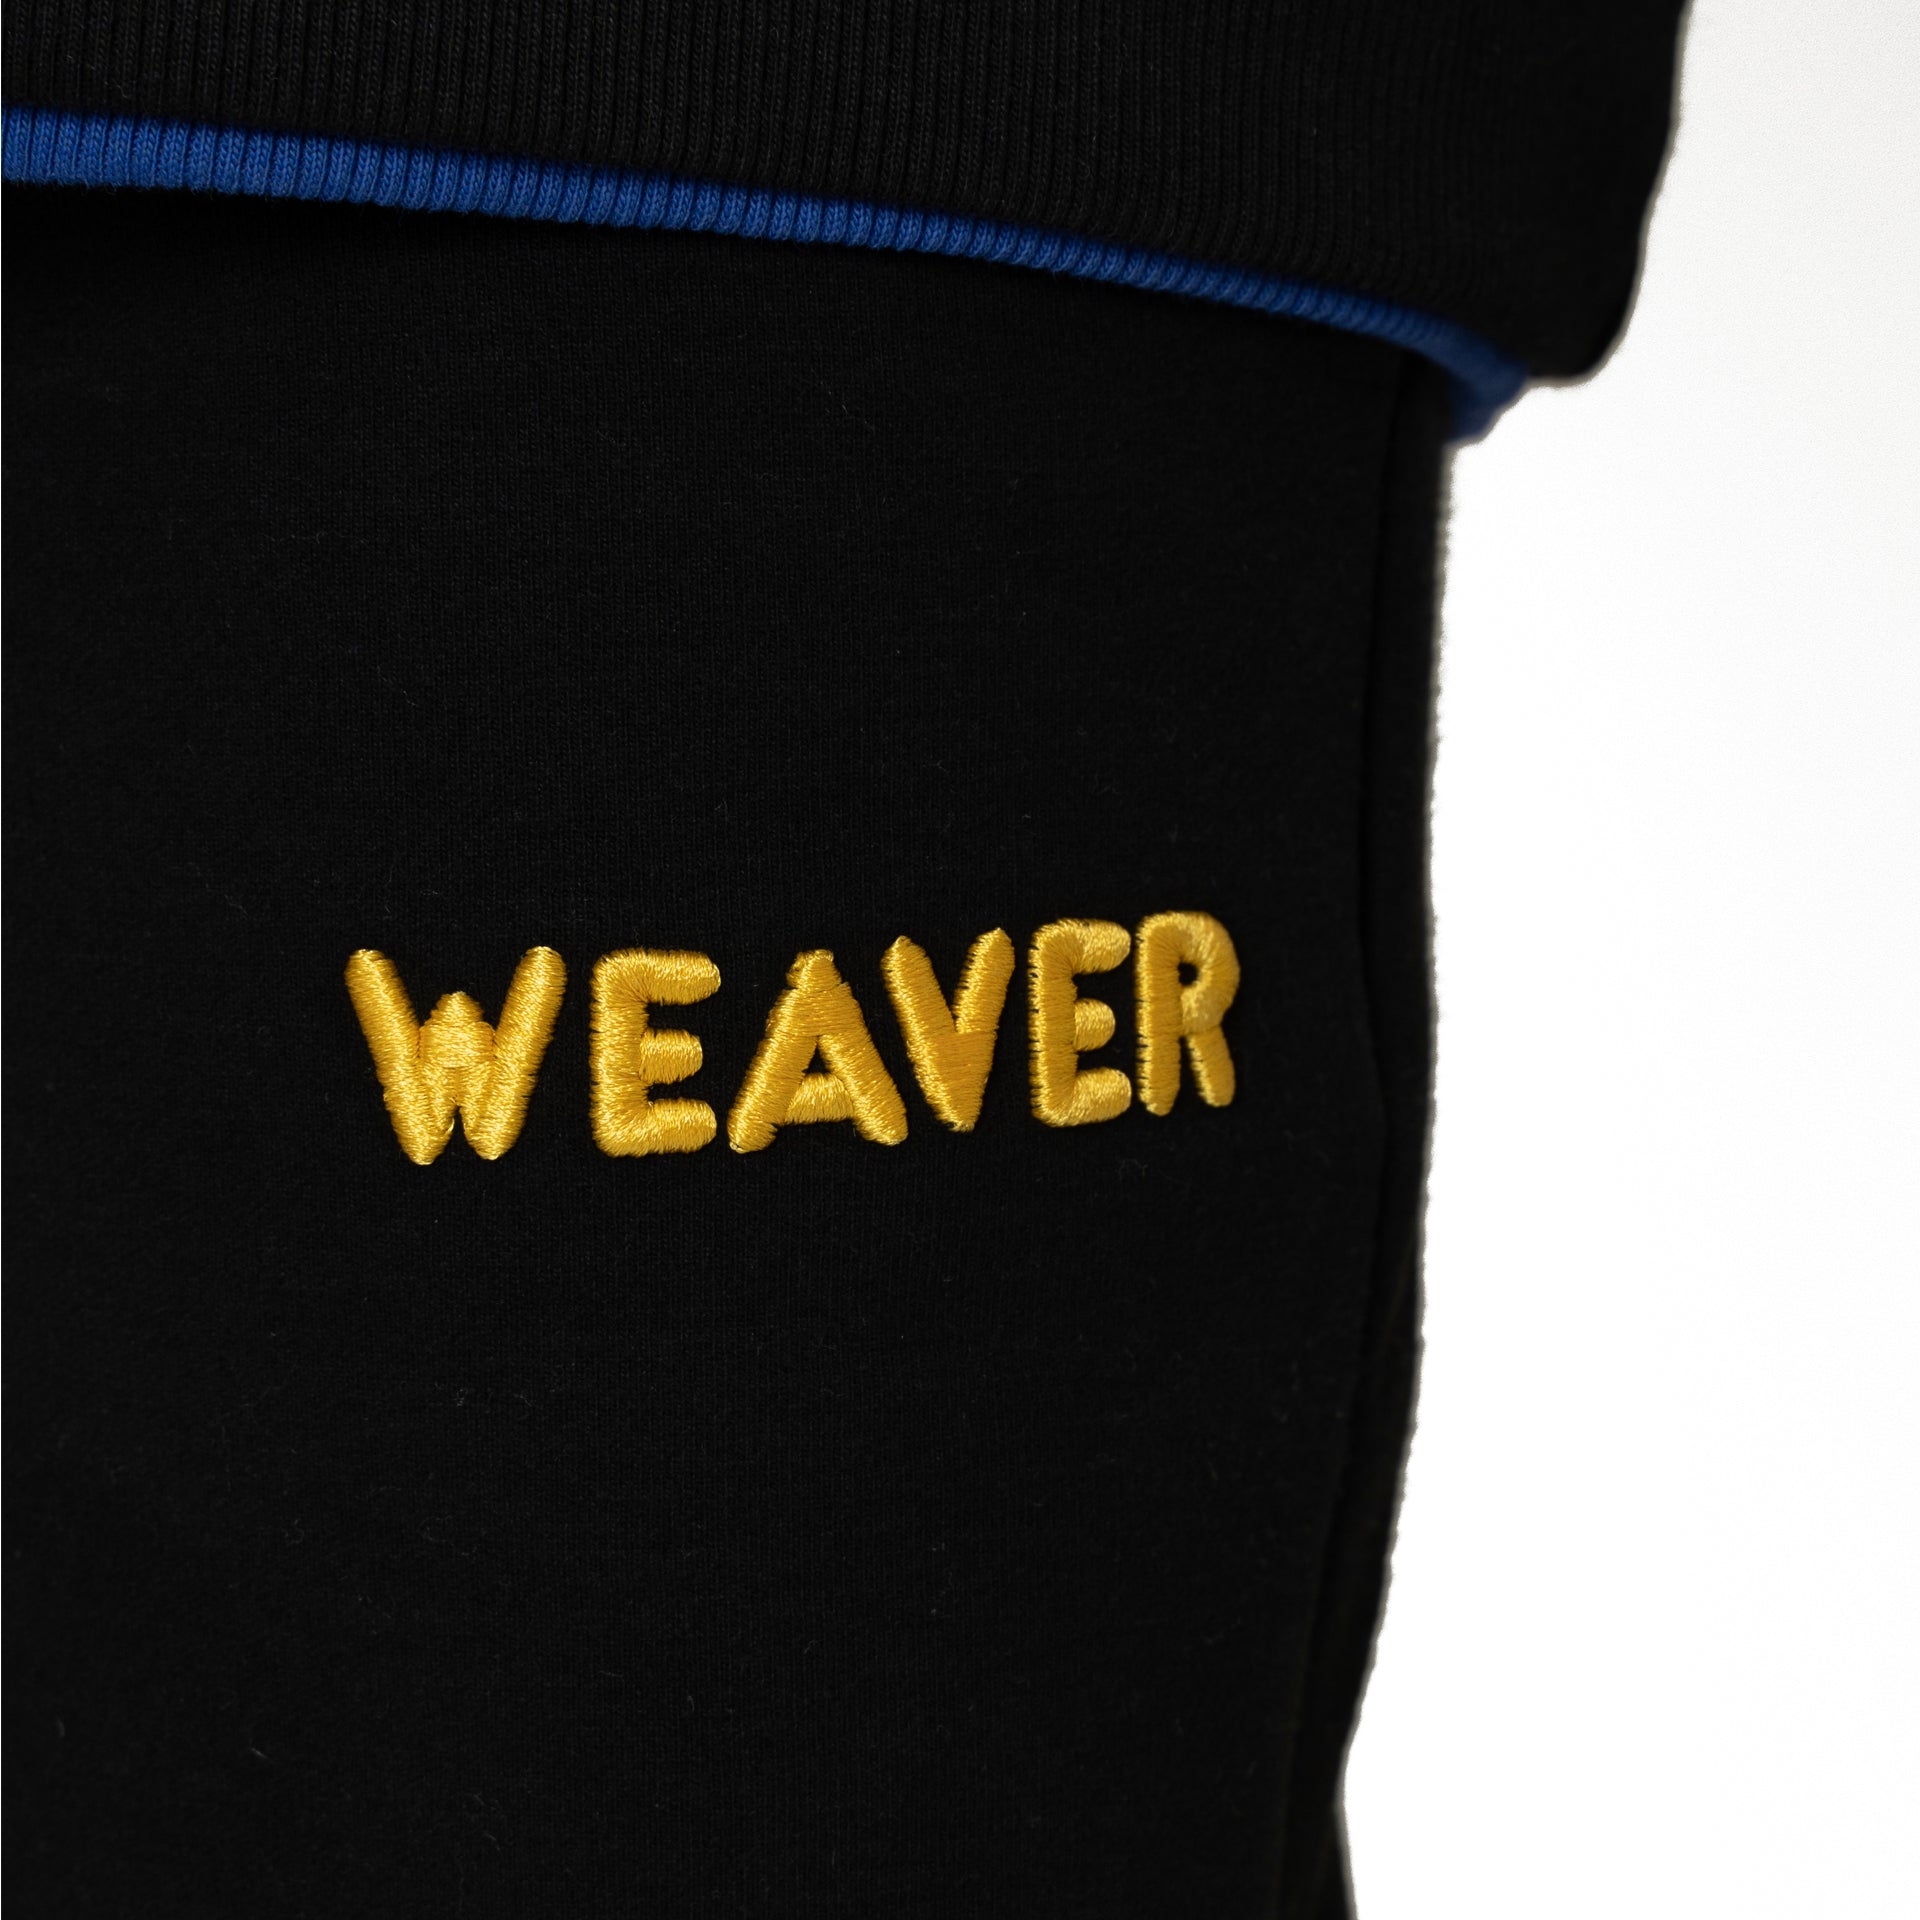 Black Child Pants From Weaver Design